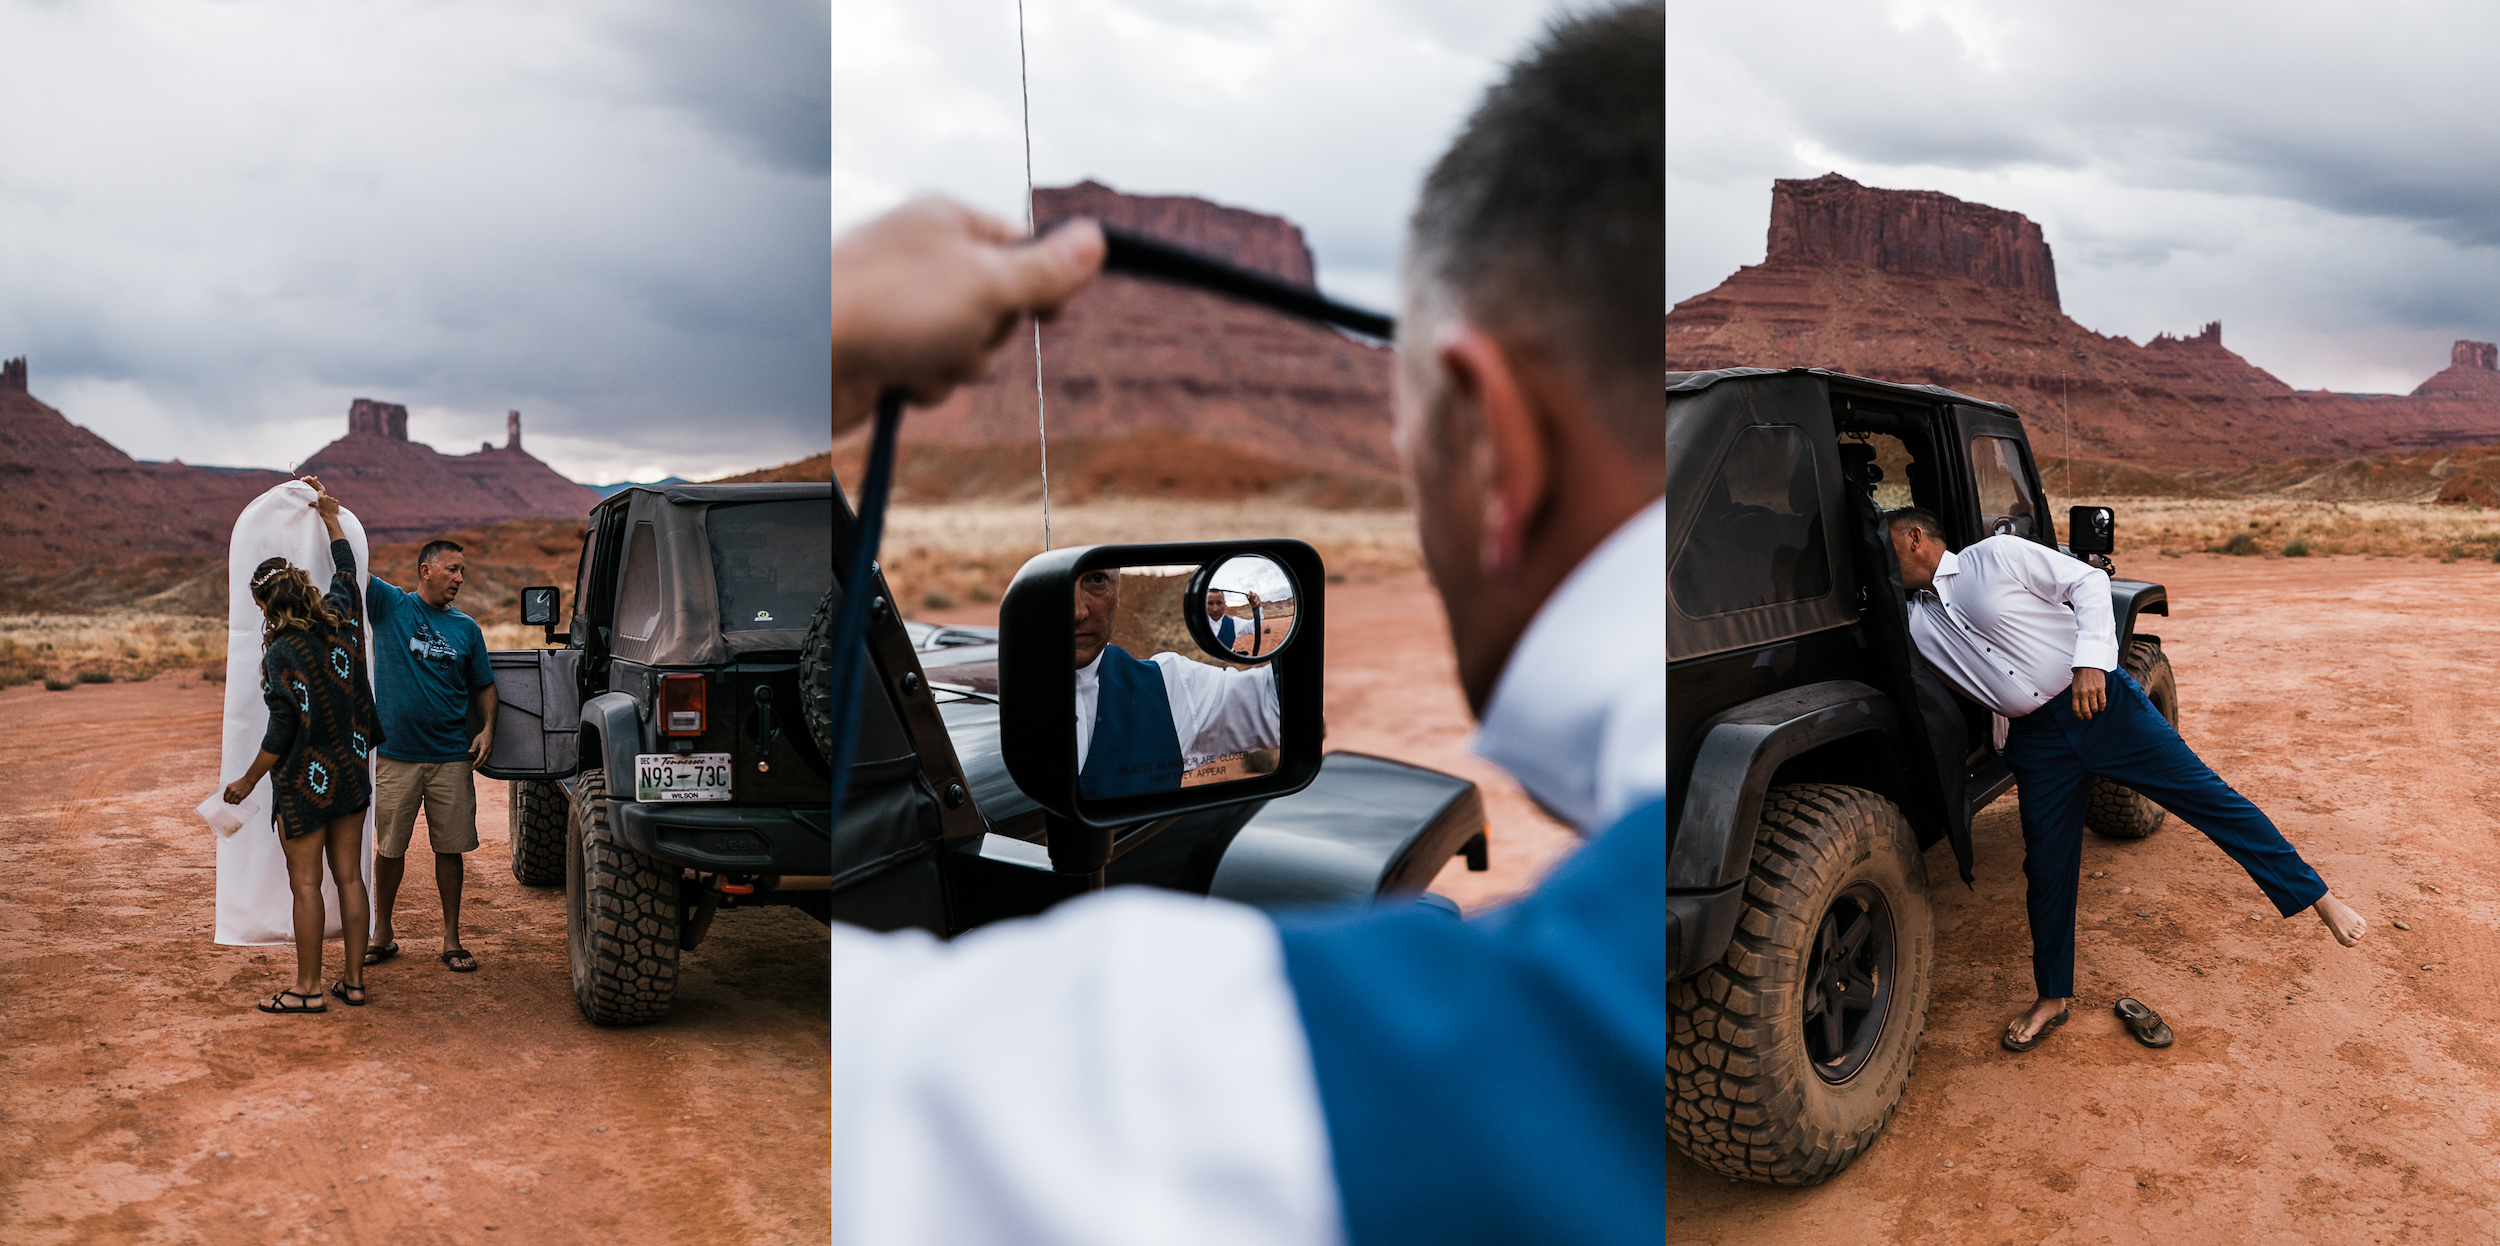 adventure jeep wedding in the utah desert | rue de seine bride | blue tux groom | moab elopement photographer | the hearnes adventure photography